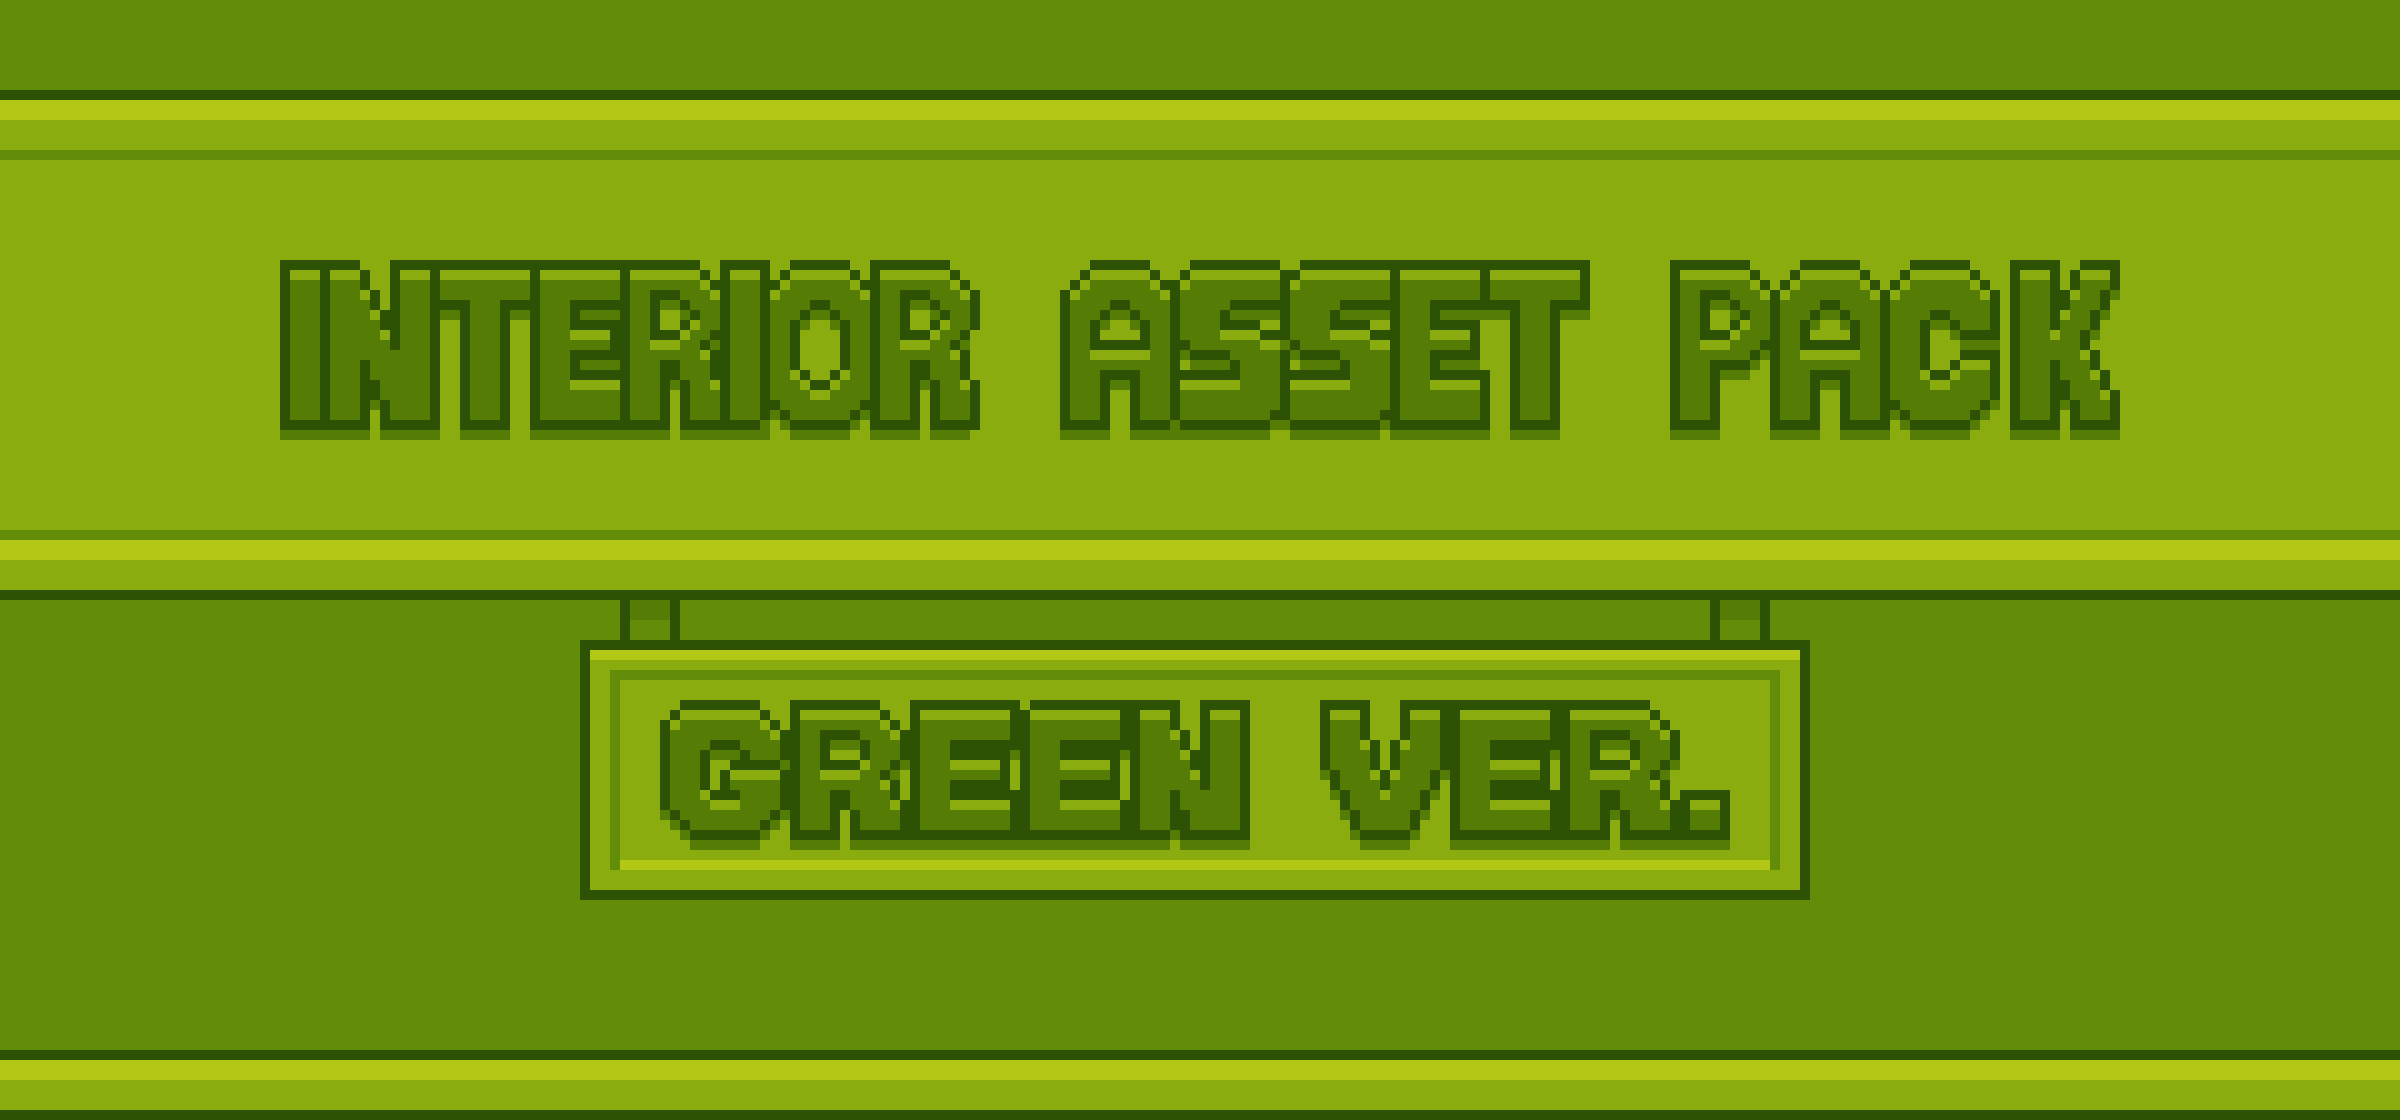 GameBoy Green Top-Down Interior Asset Pack